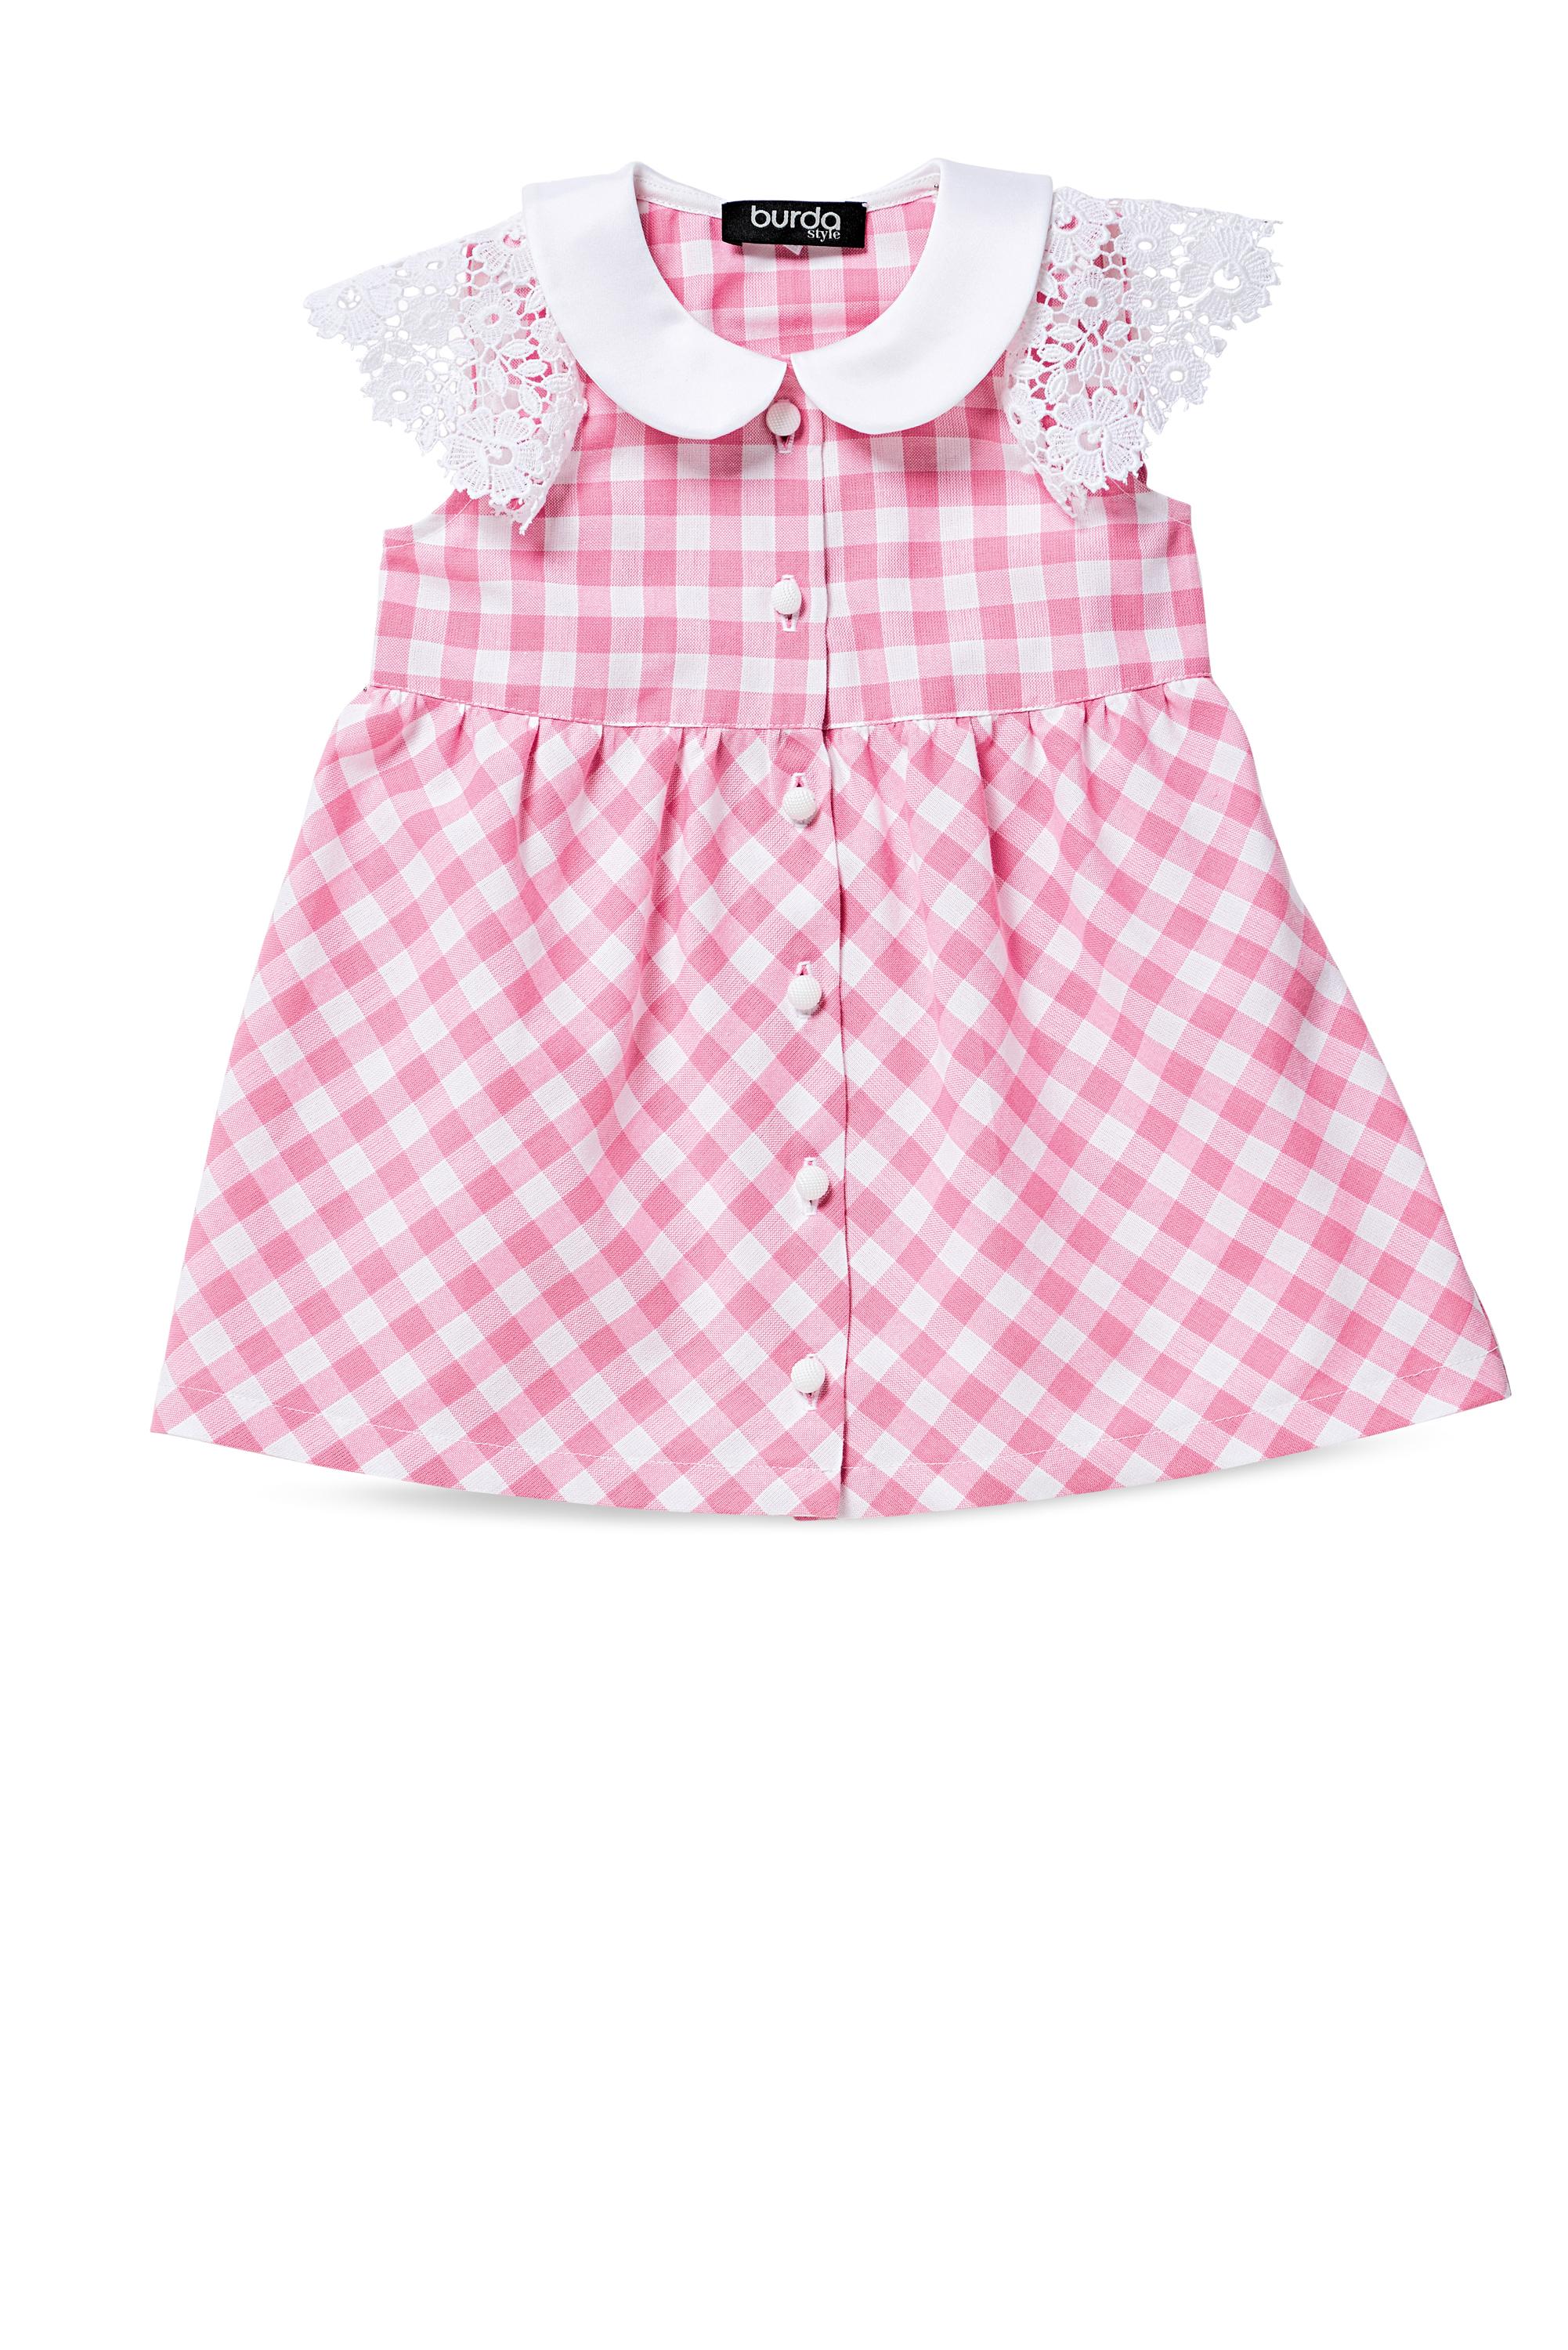 Burda B9357 Baby Collar Dress and Panties